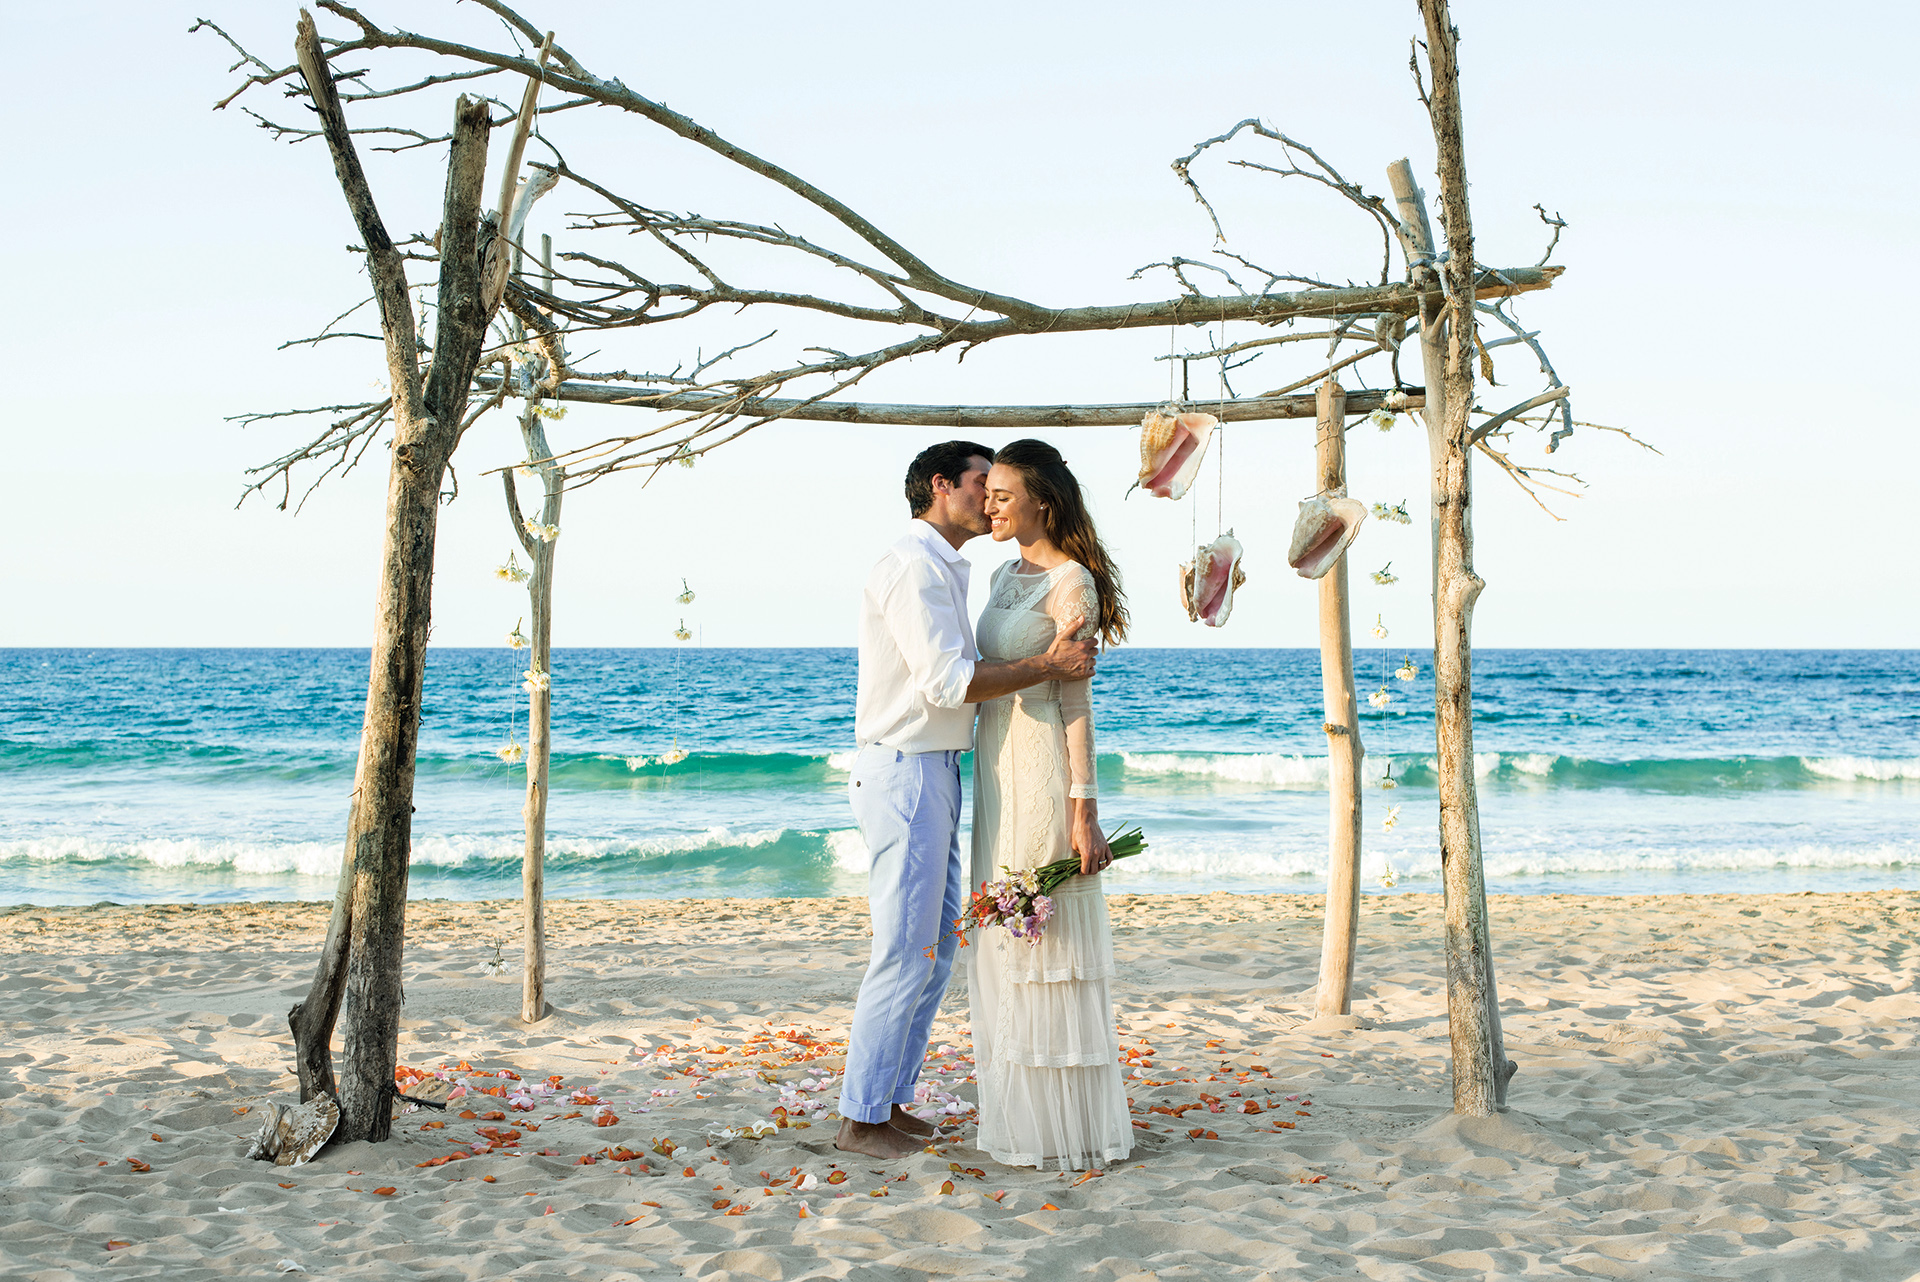 Plan the Best Caribbean Destination Wedding